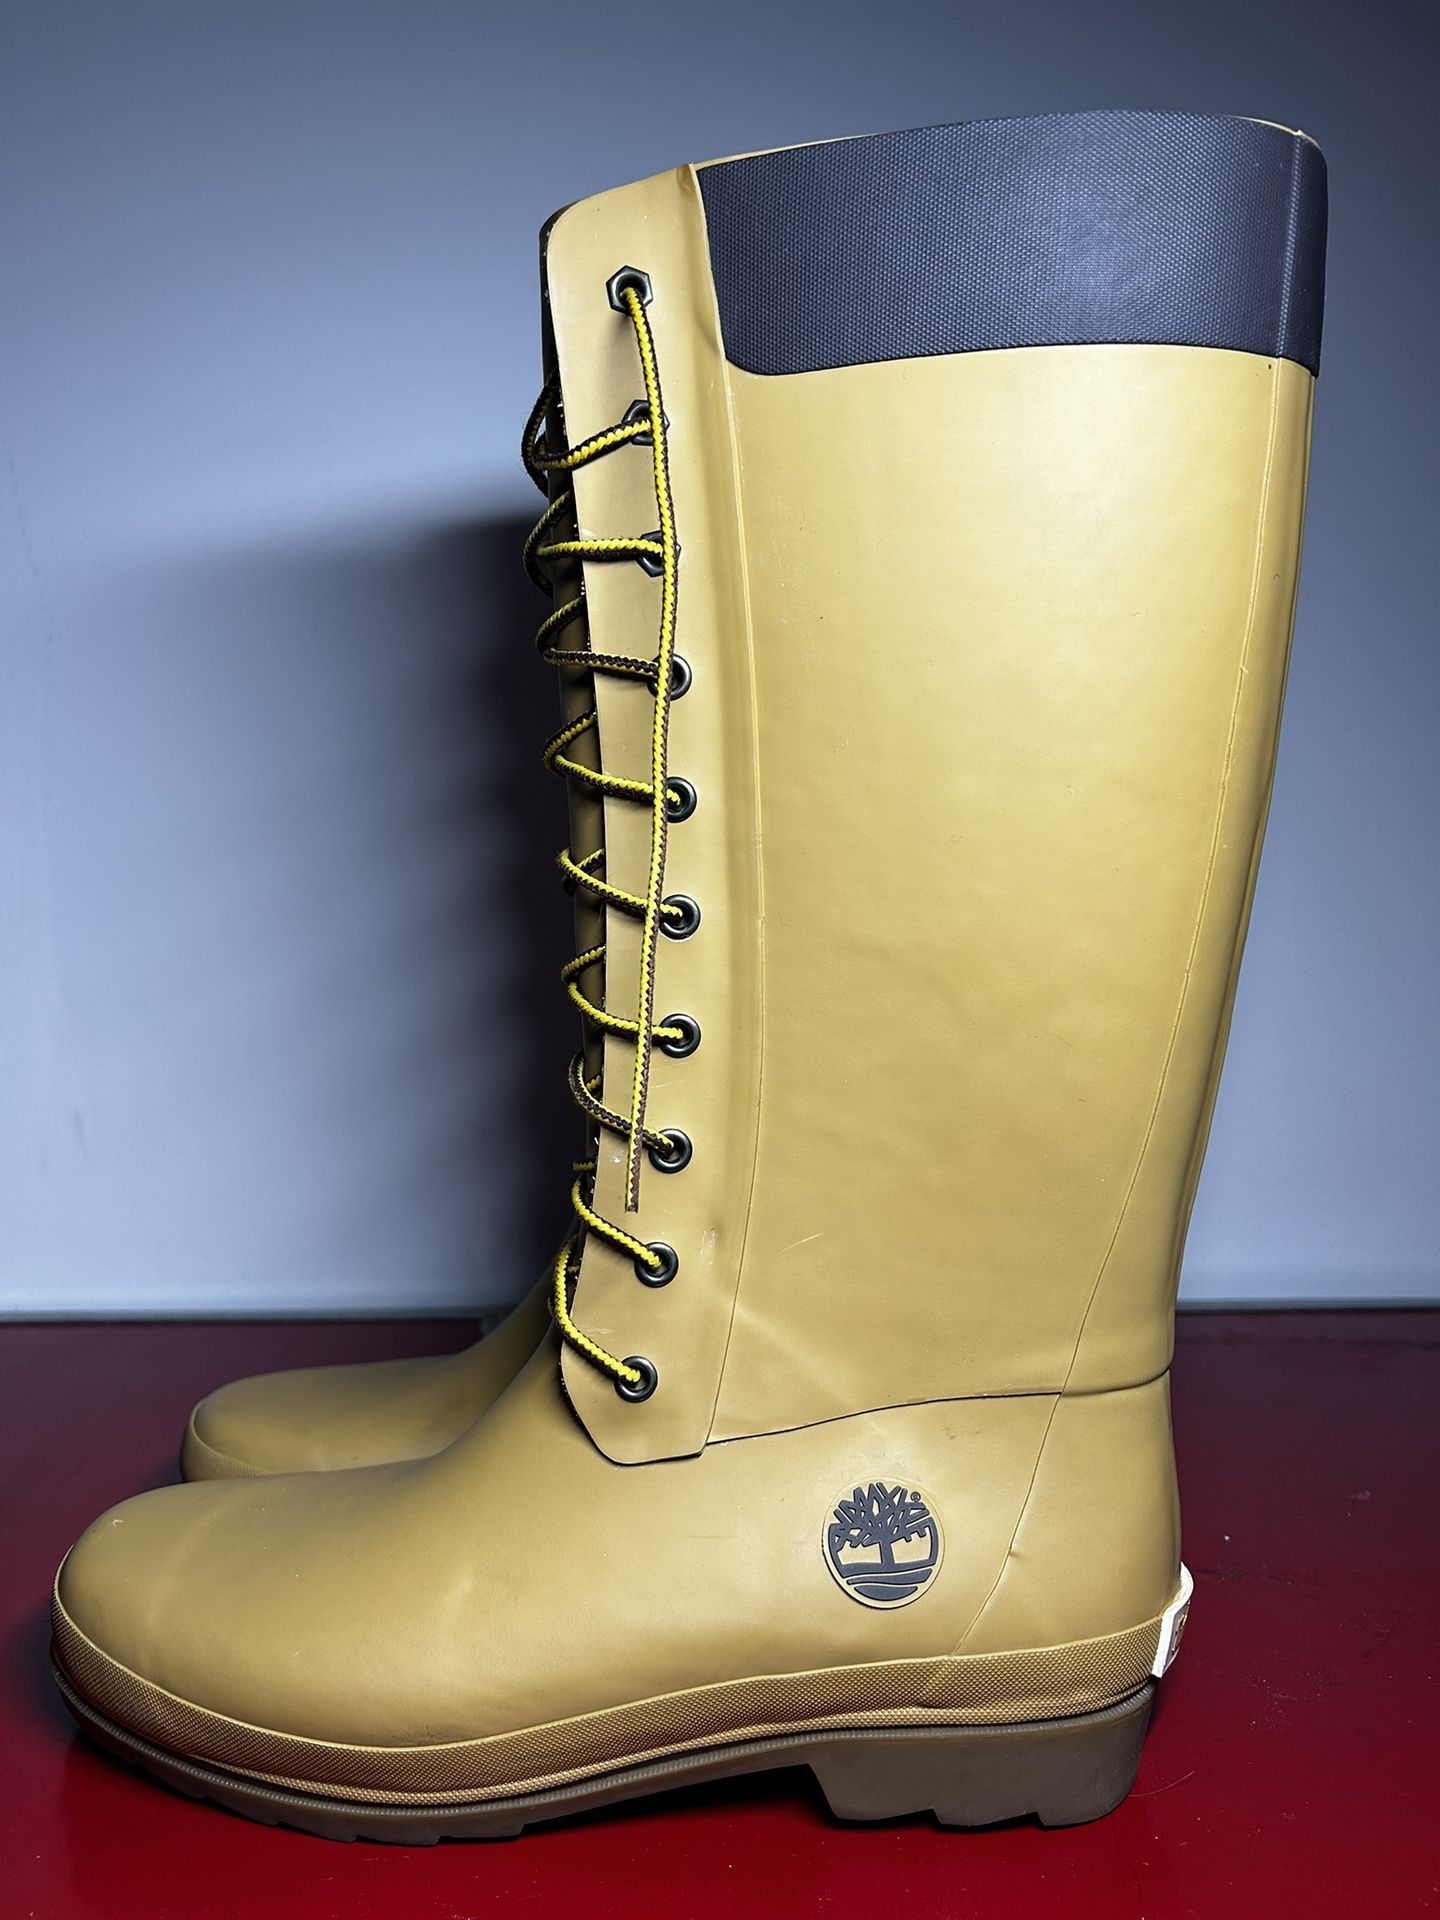 Timberland 14" Tall Rubber Rain Boots Womens Sz 10 Tan Yellow Lace Up